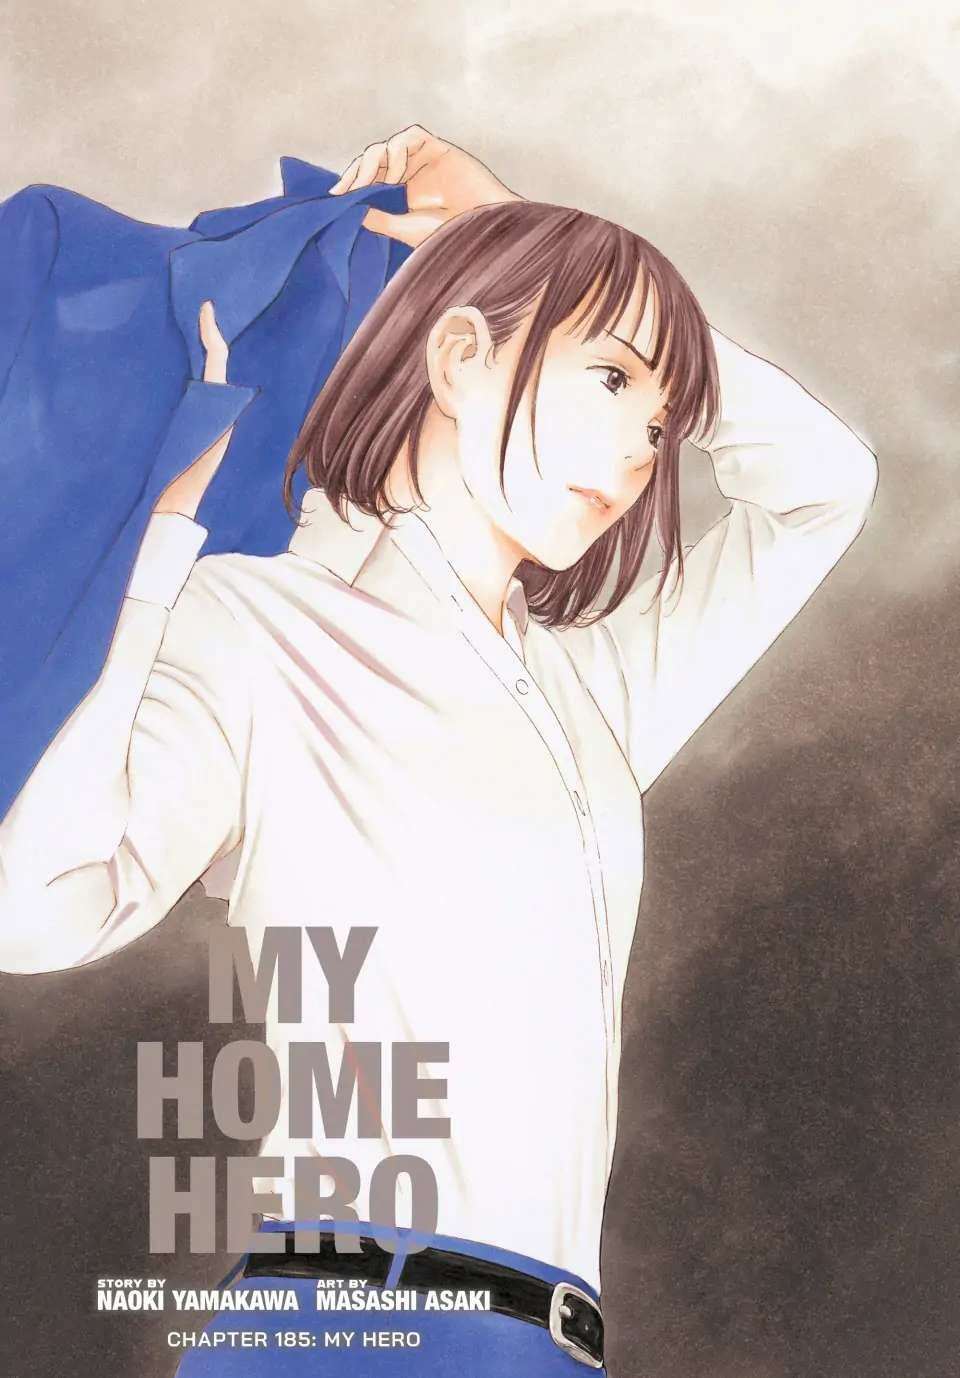 Read My Home Hero Vol.3 Chapter 25: One Day Remaining on Mangakakalot